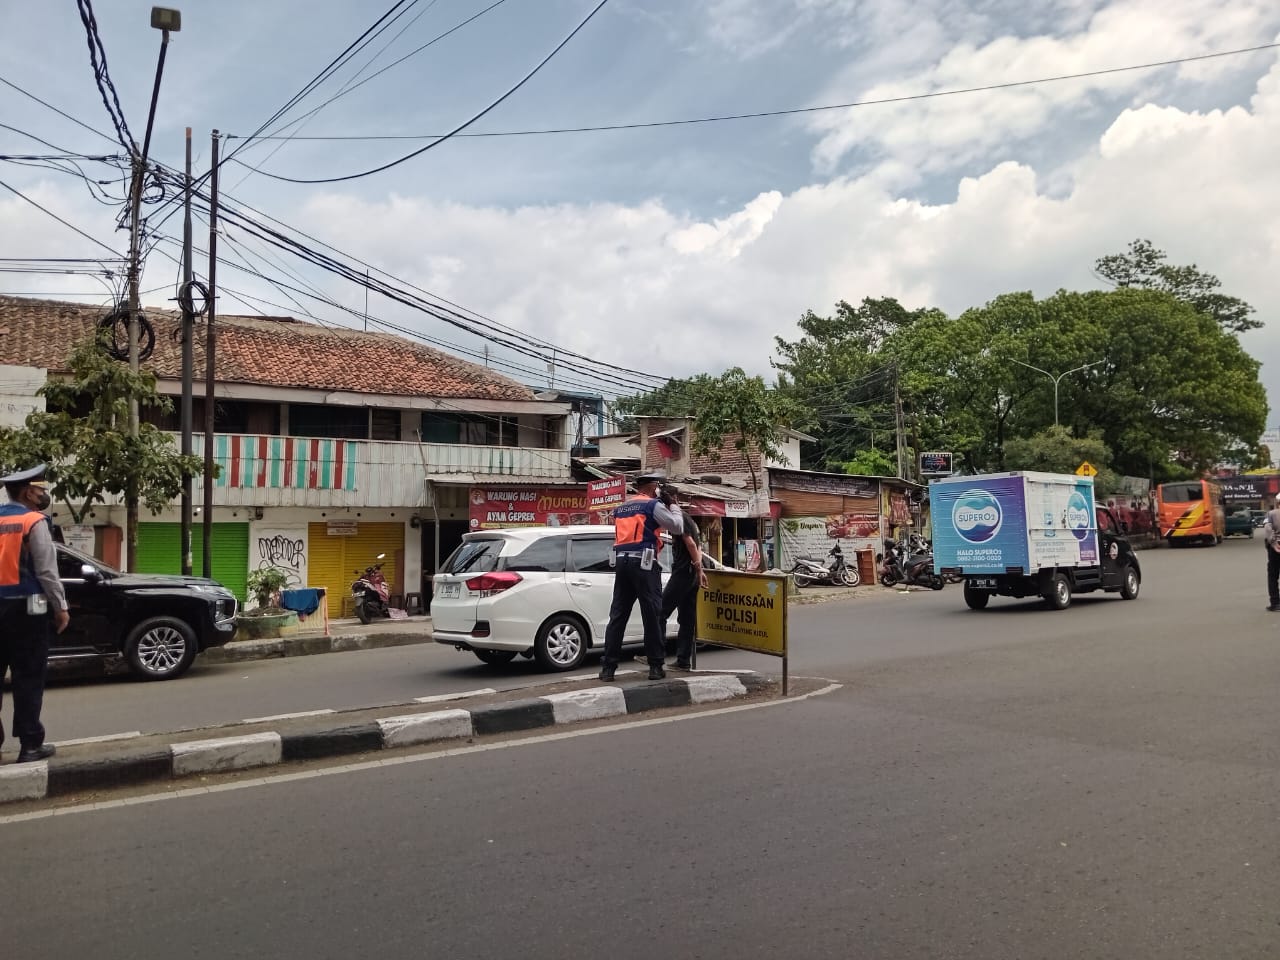 Gandeng Dishub, Polsek Cibeunying Kidul gelar operasi kepolisian di Jalan Ahmad Yani, Kota Bandung. (Sadam Husen / JE)